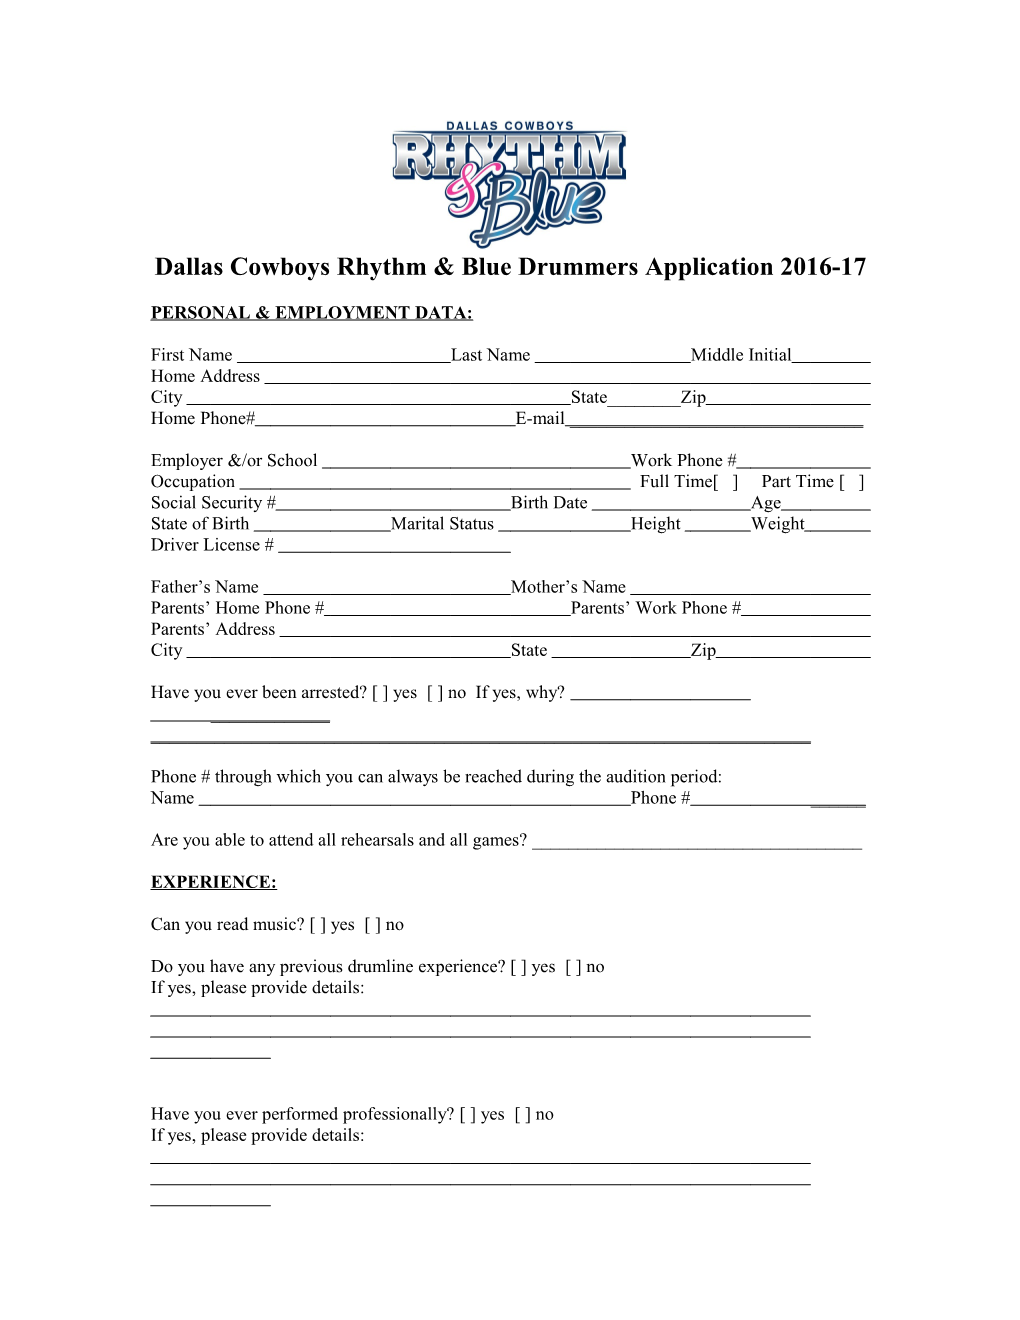 Dallas Cowboys Football Club Cheerleader Application